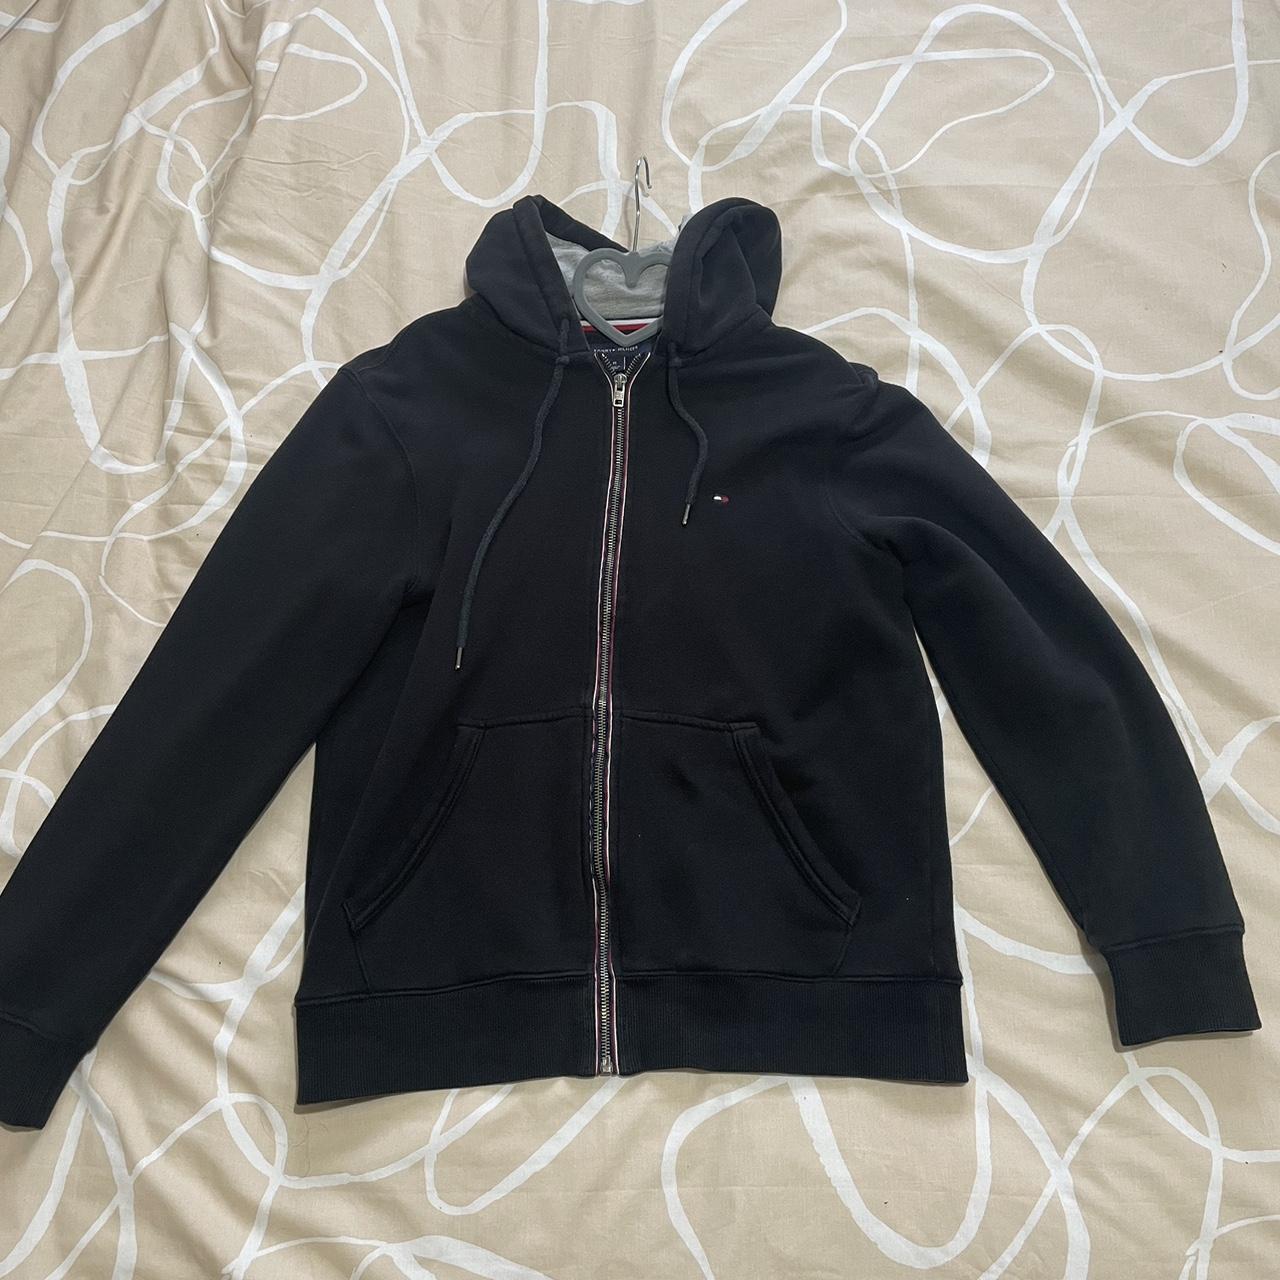 Medium size Tommy Hilfiger zip up hoodie/jacket size... - Depop